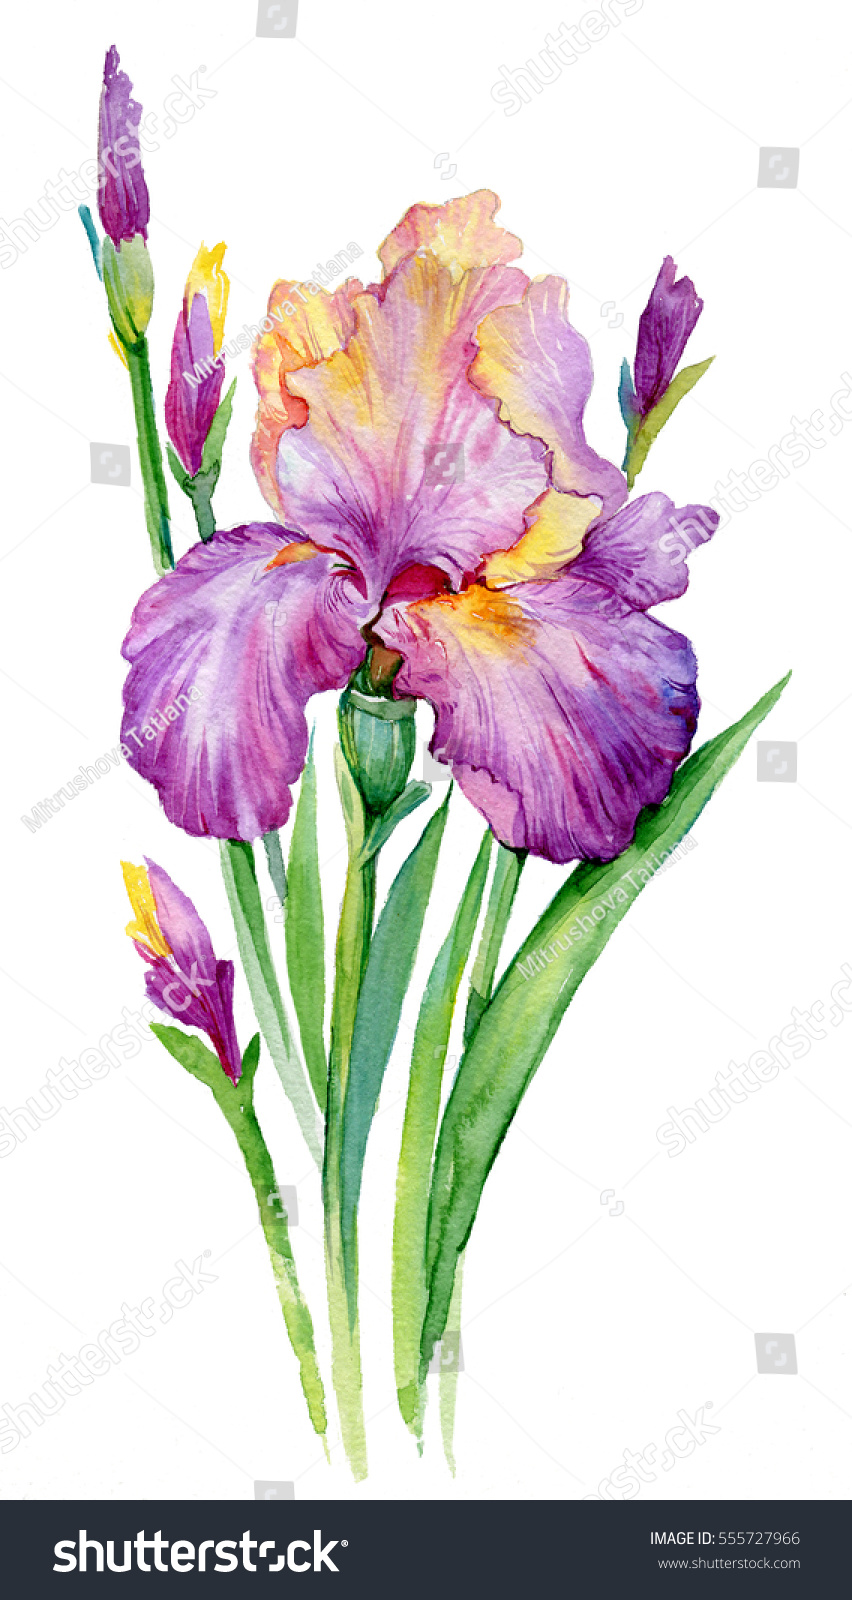 Purple Iris Illustration Watercolor Iris Flower Stock Illustration 555727966